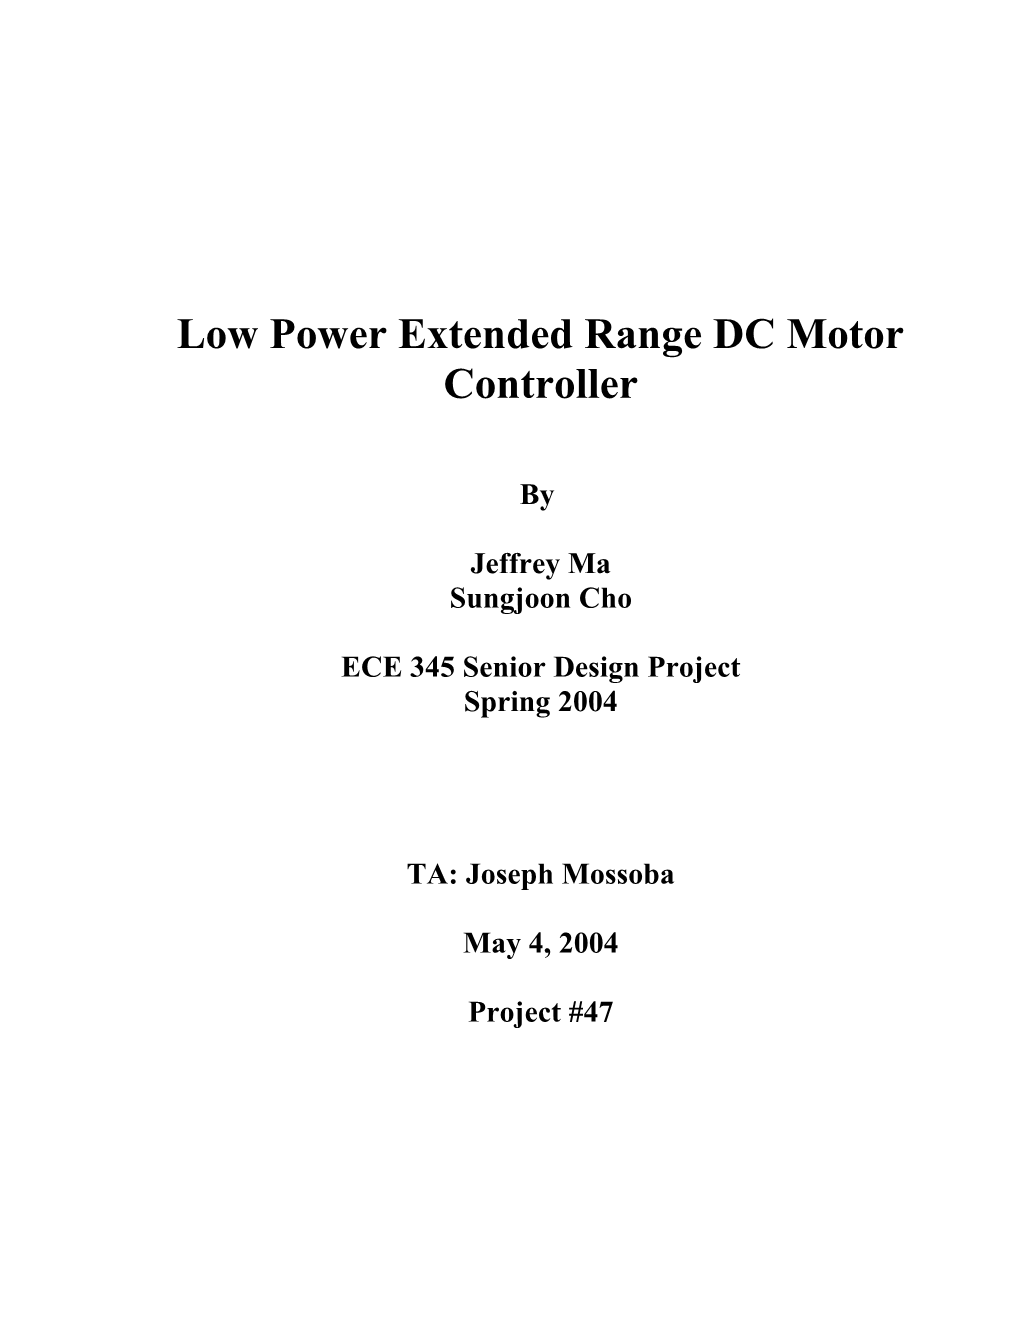 Low Power Extended Range DC Motor Controller